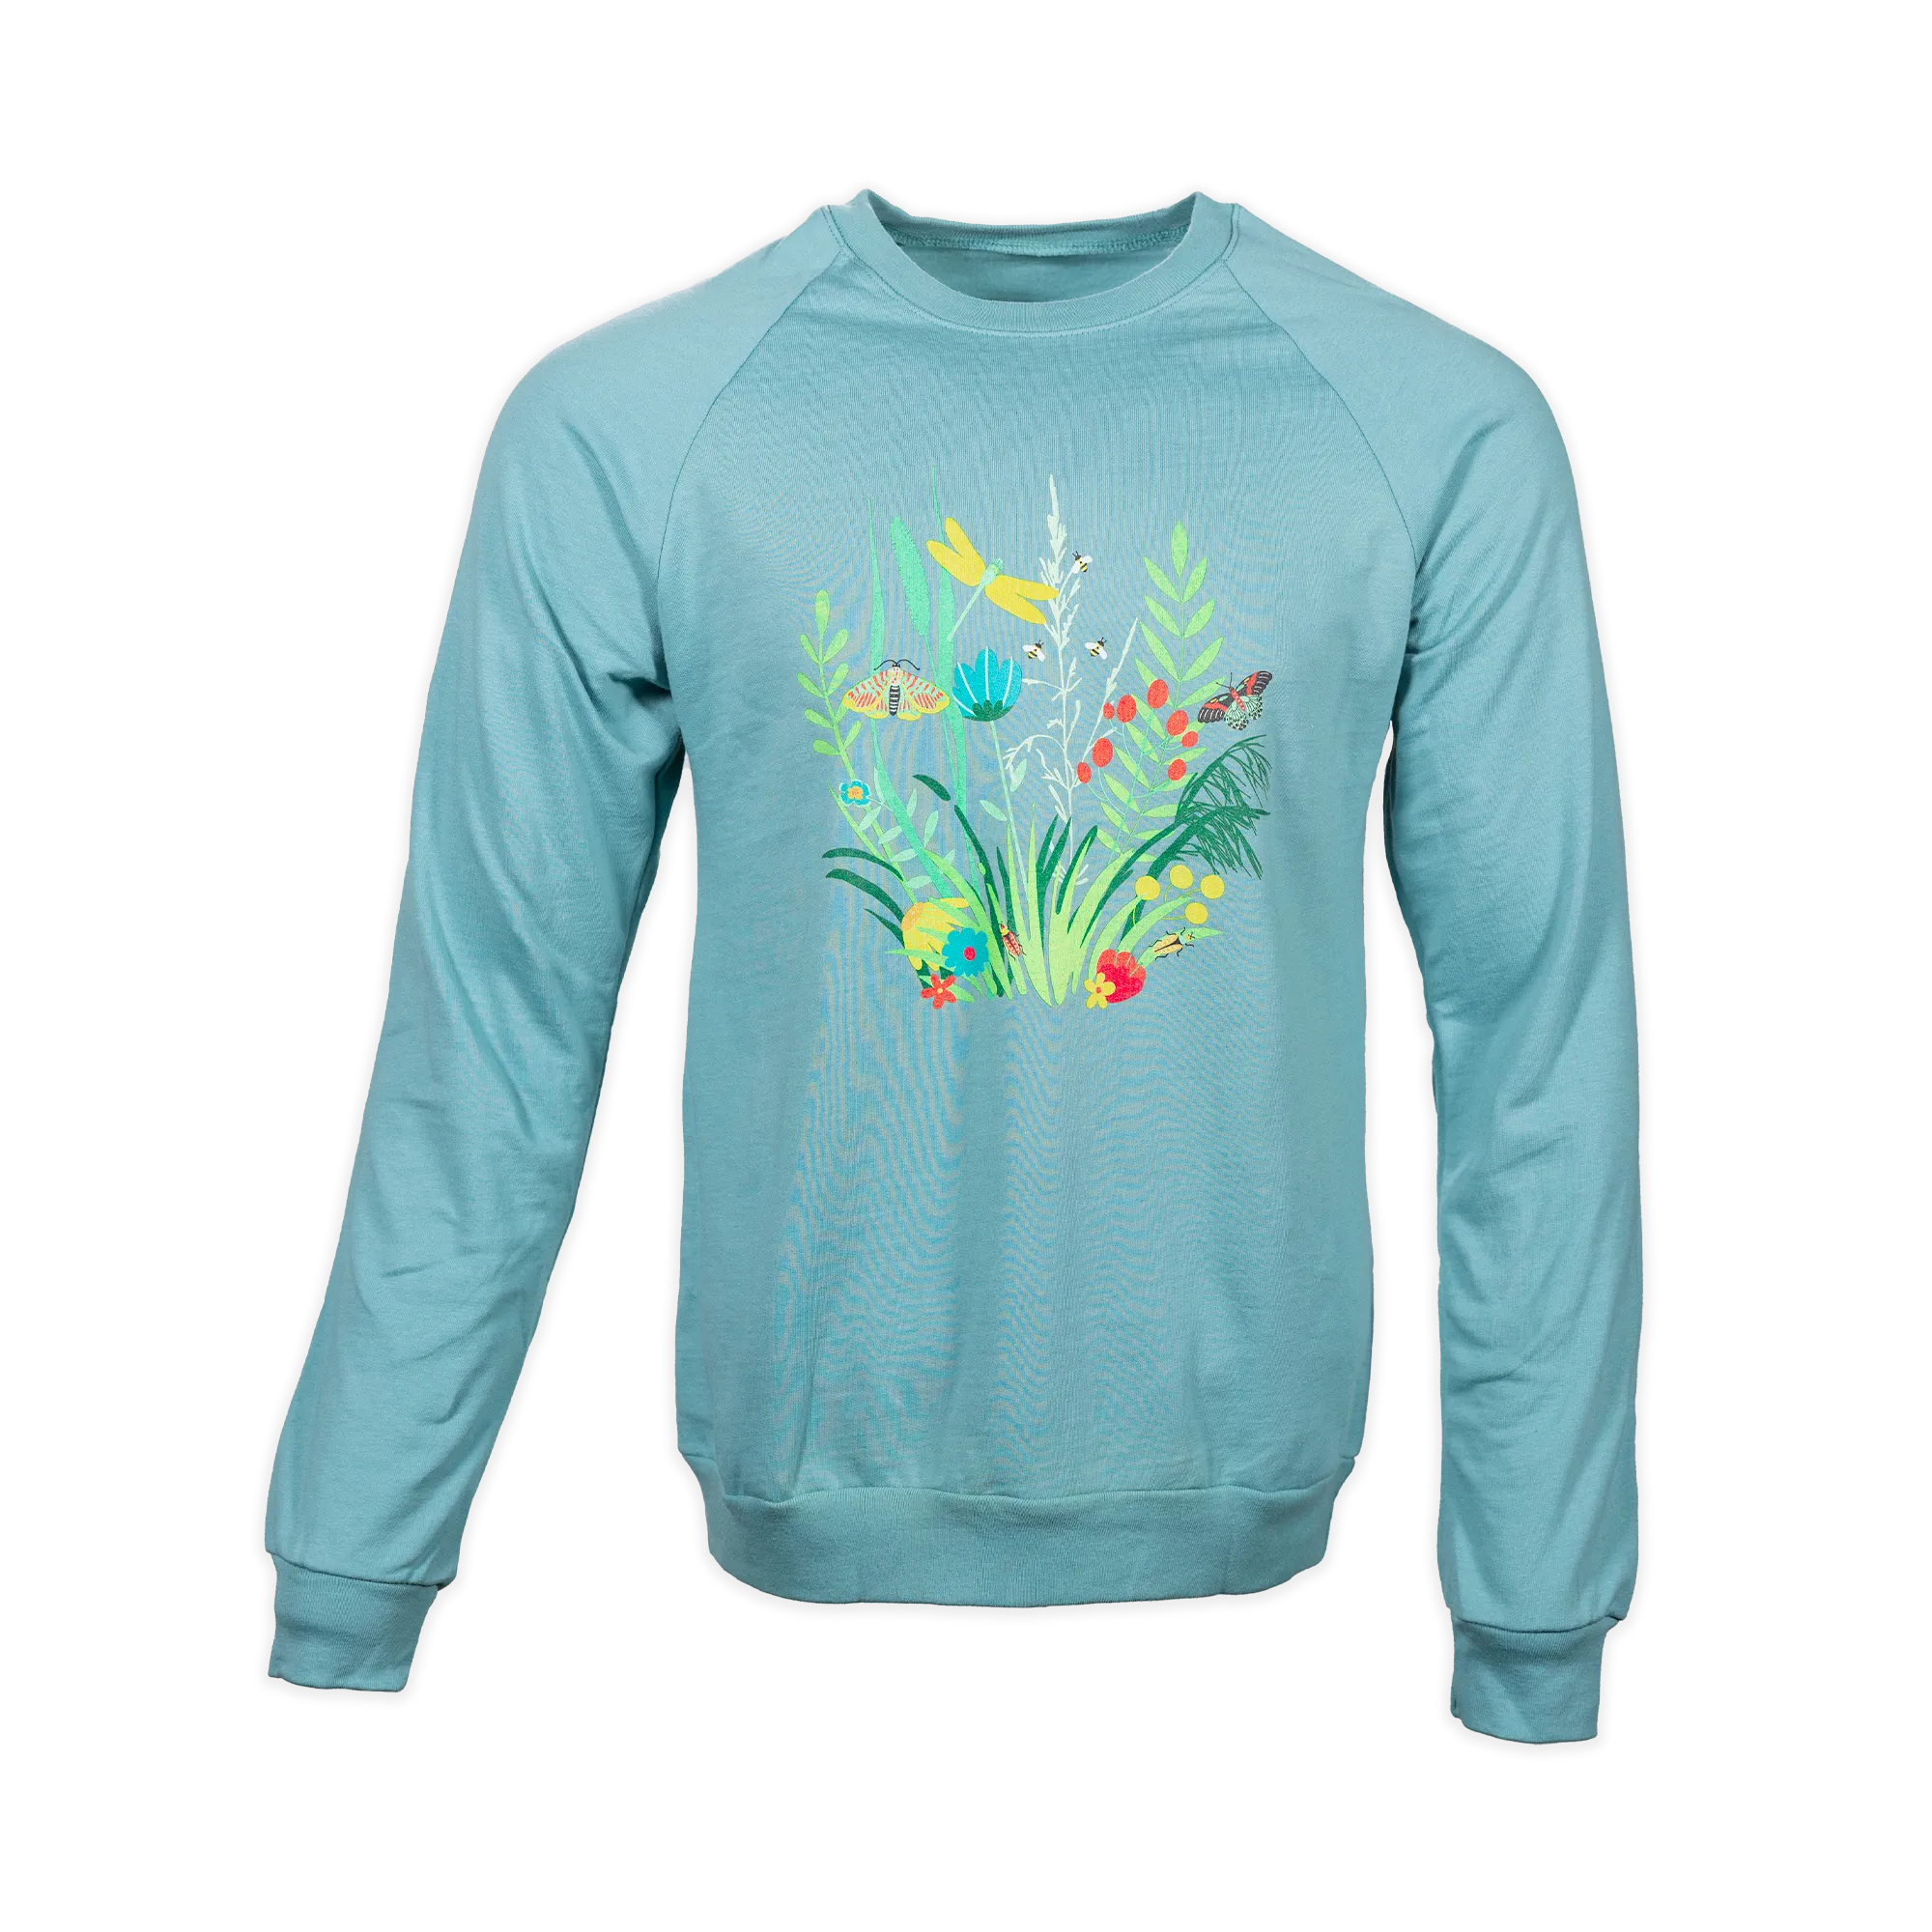 Visit the Pollinator Sweatshirt - Multicolor Product Page